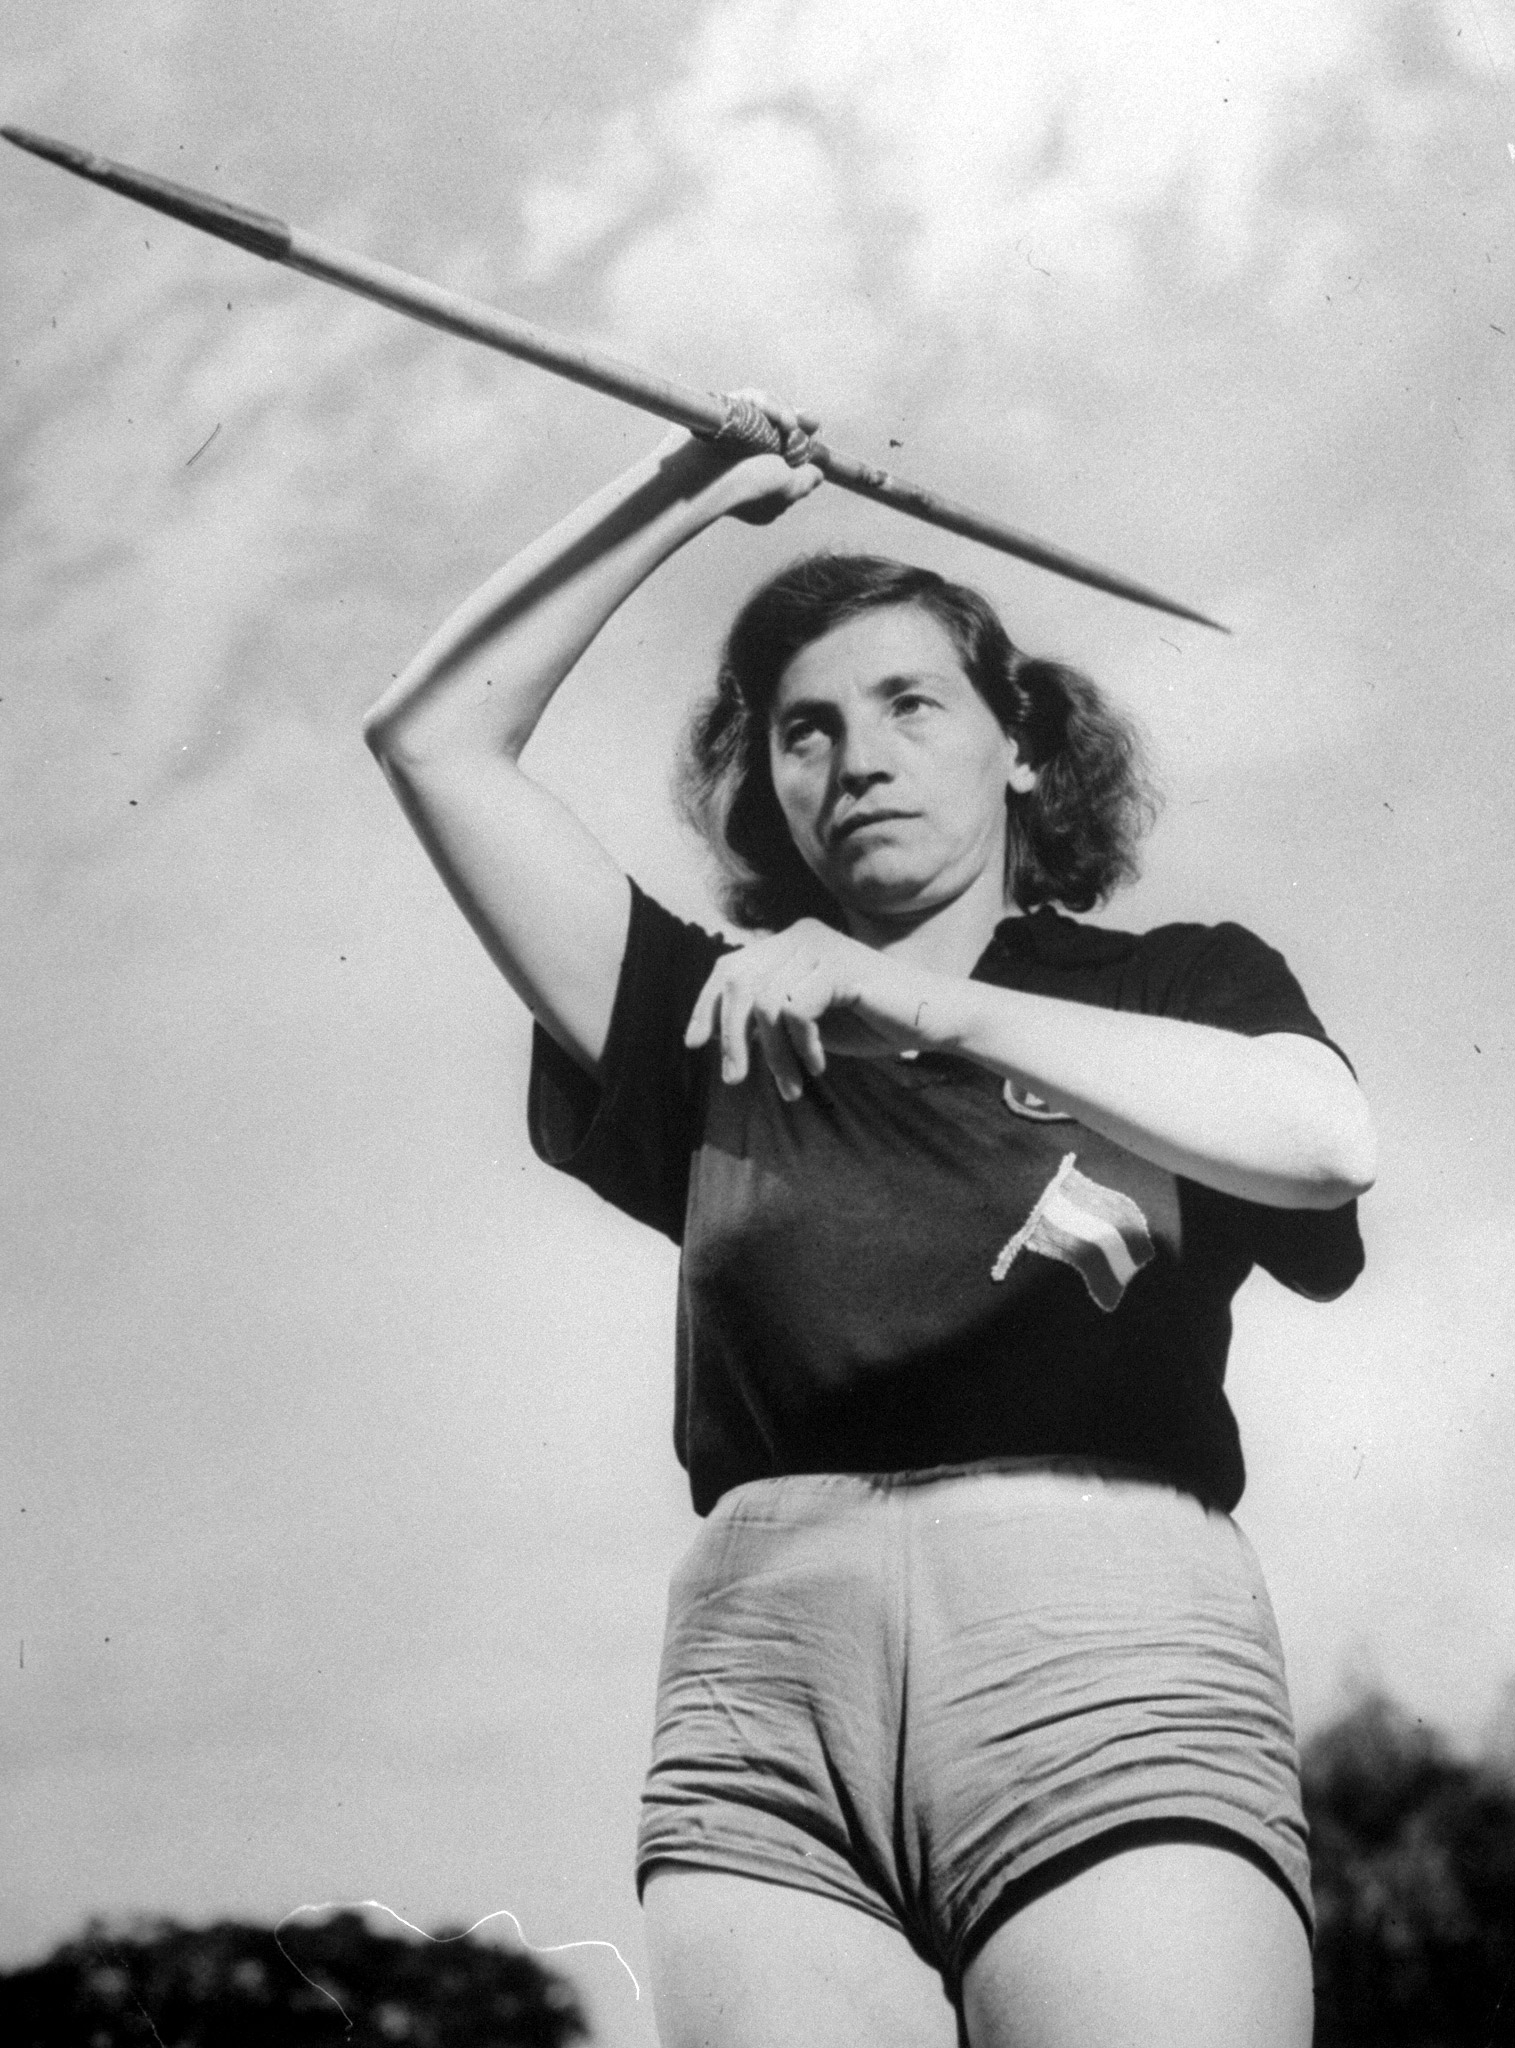 Javelin winner Herma Baumer at the 1948 summer Olympics in London.